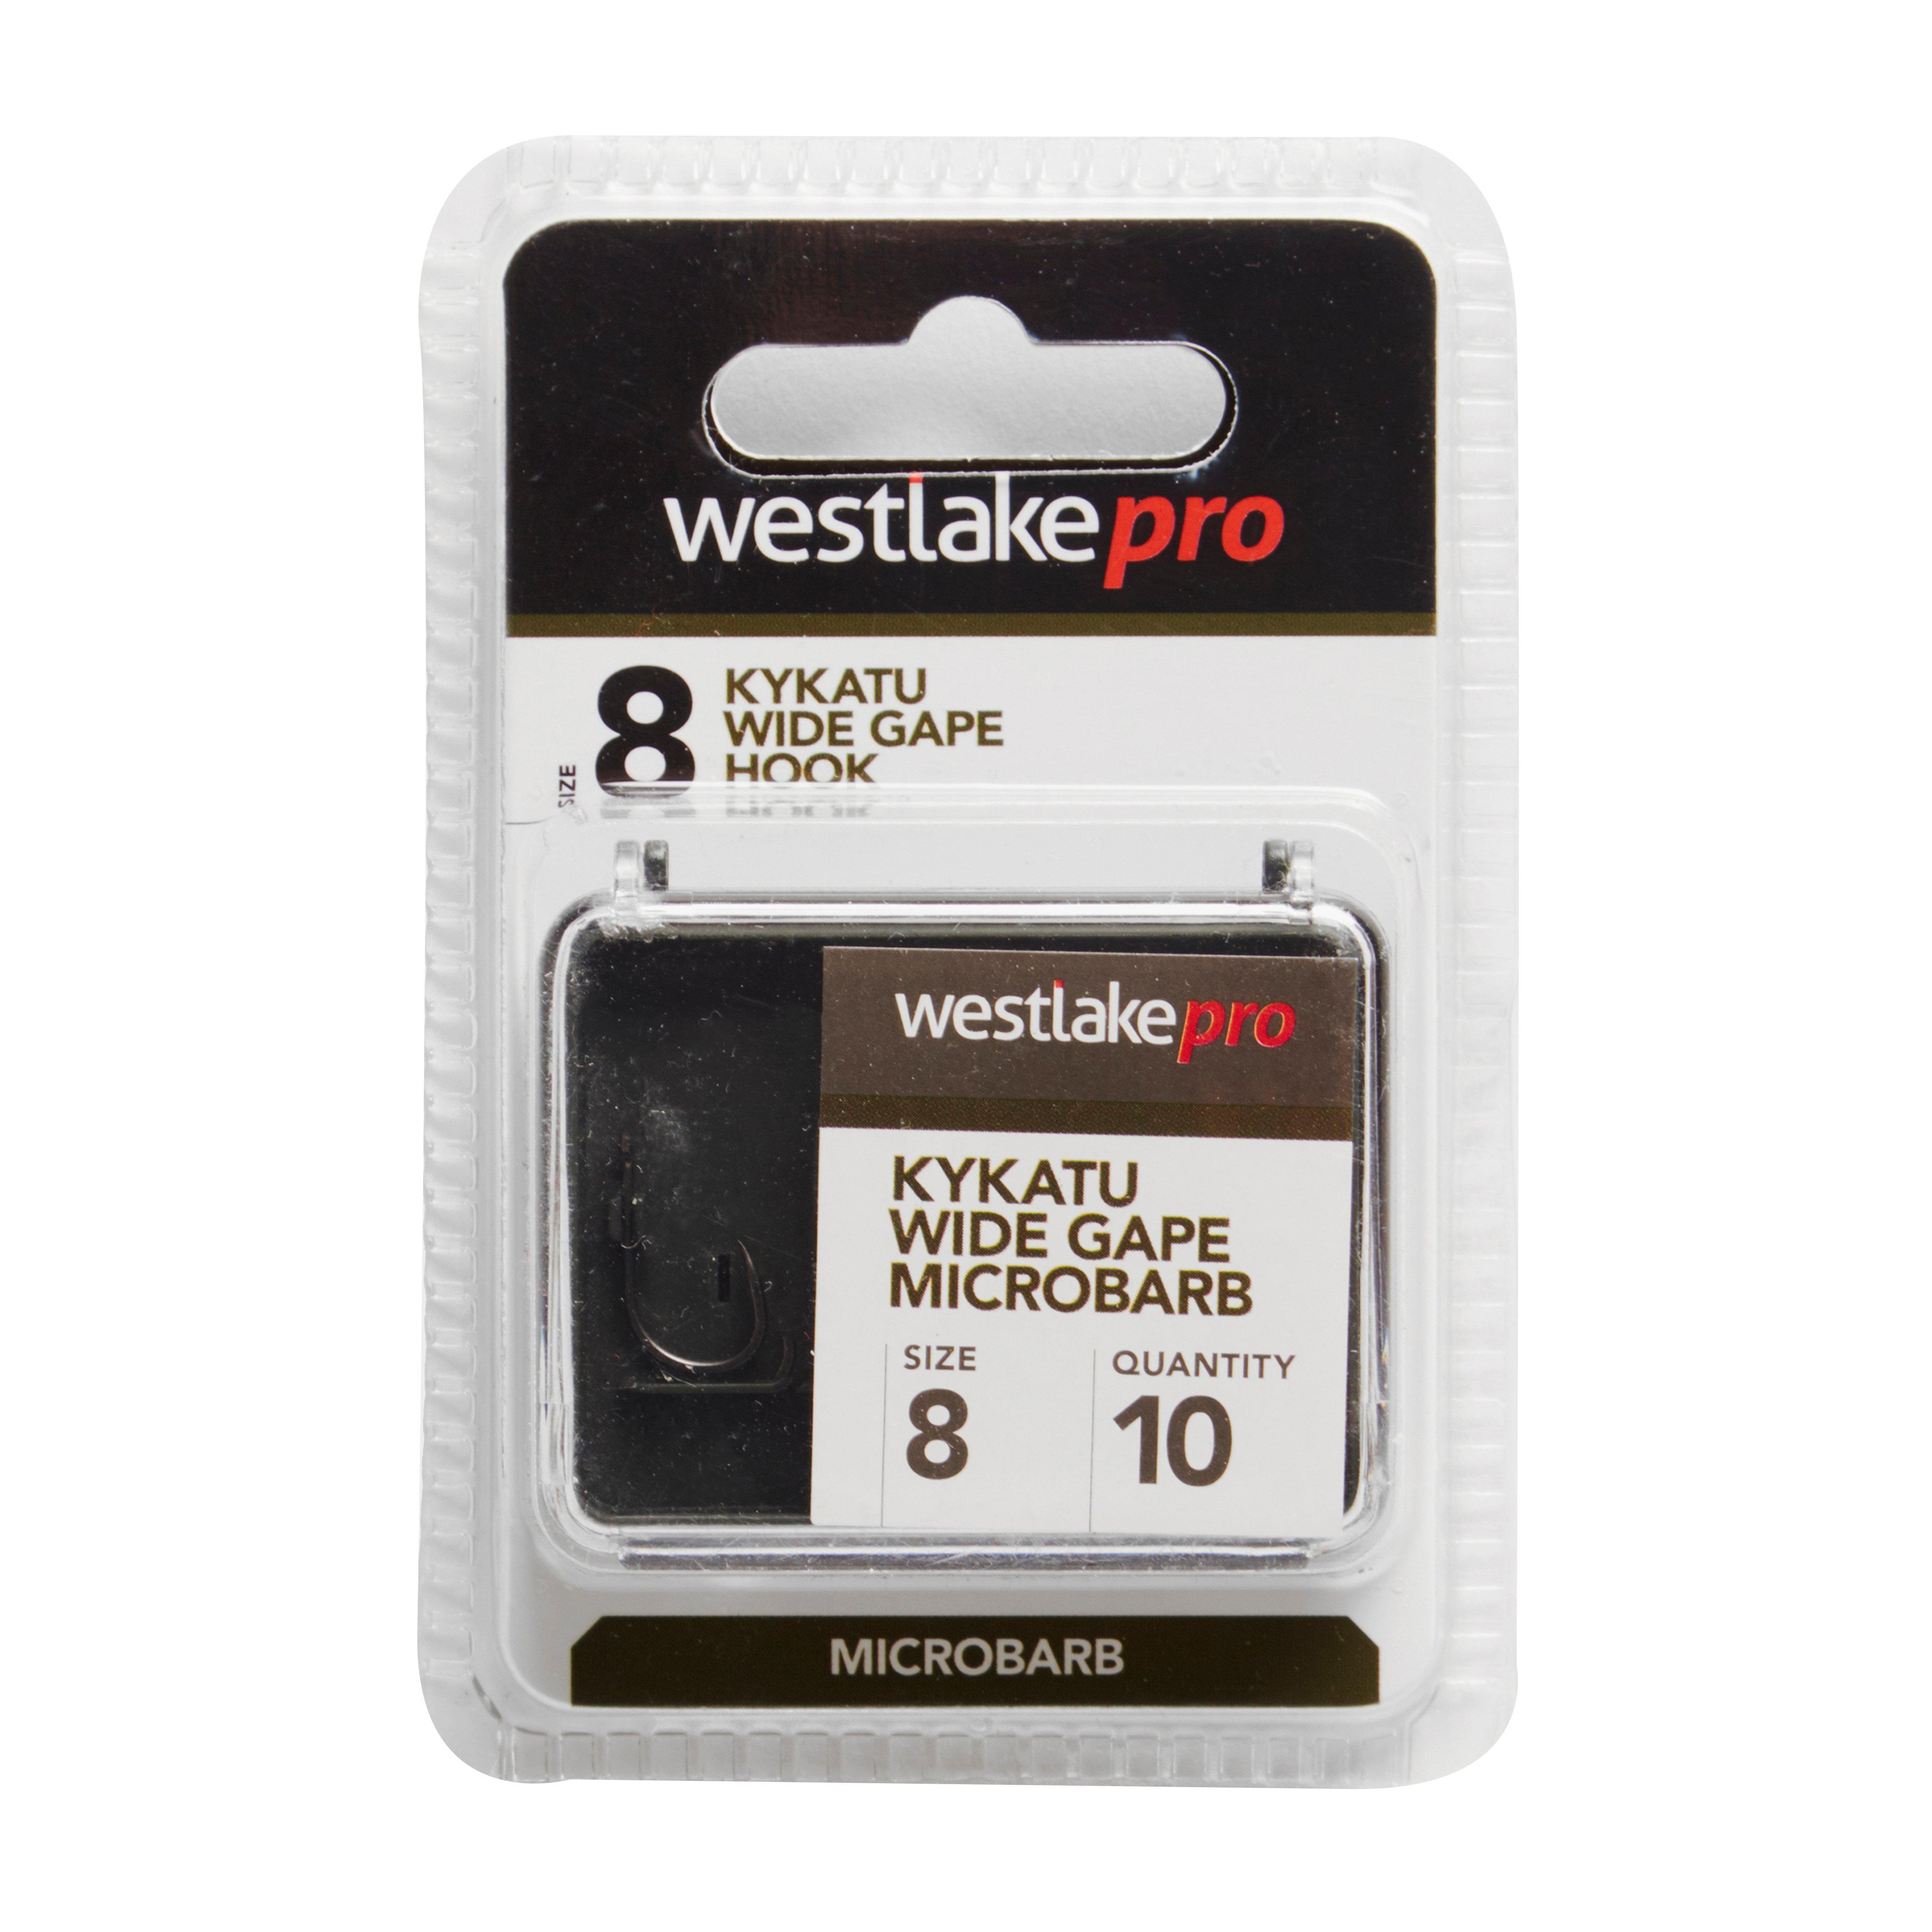 Westlake Wide Gape 8 Micro Barb Review